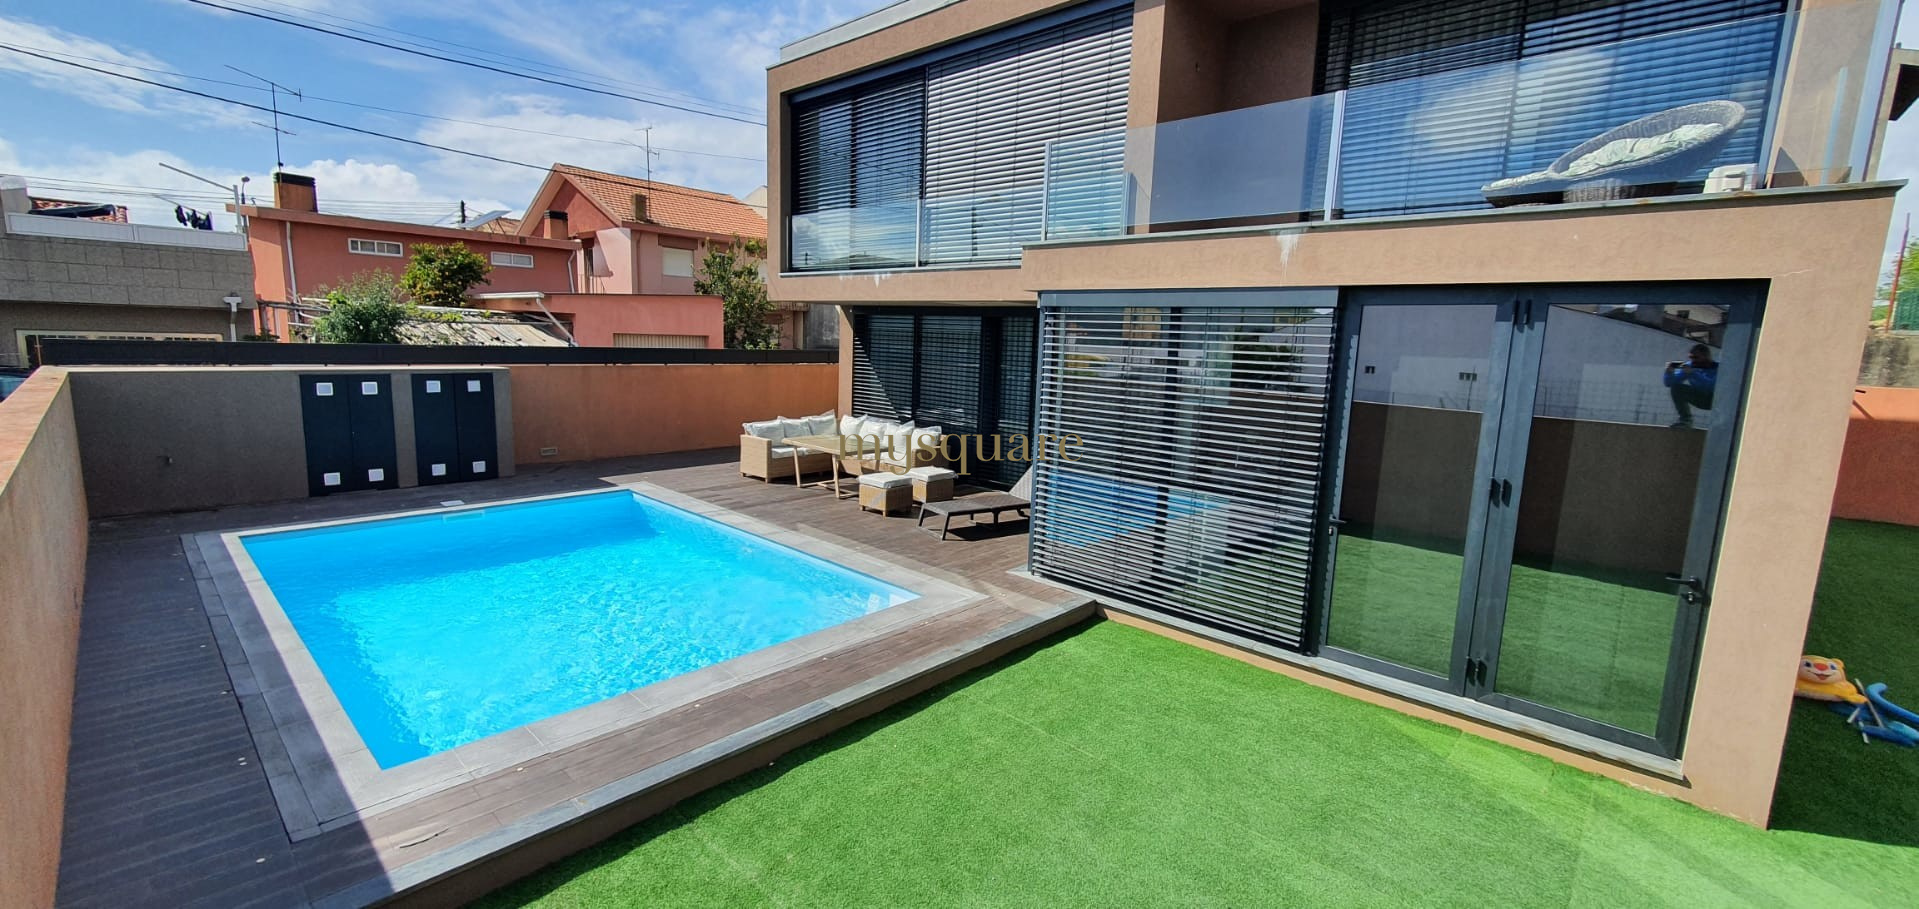 Luxury 3 bedroom villa with swimming pool in Guifões, Matosinhos